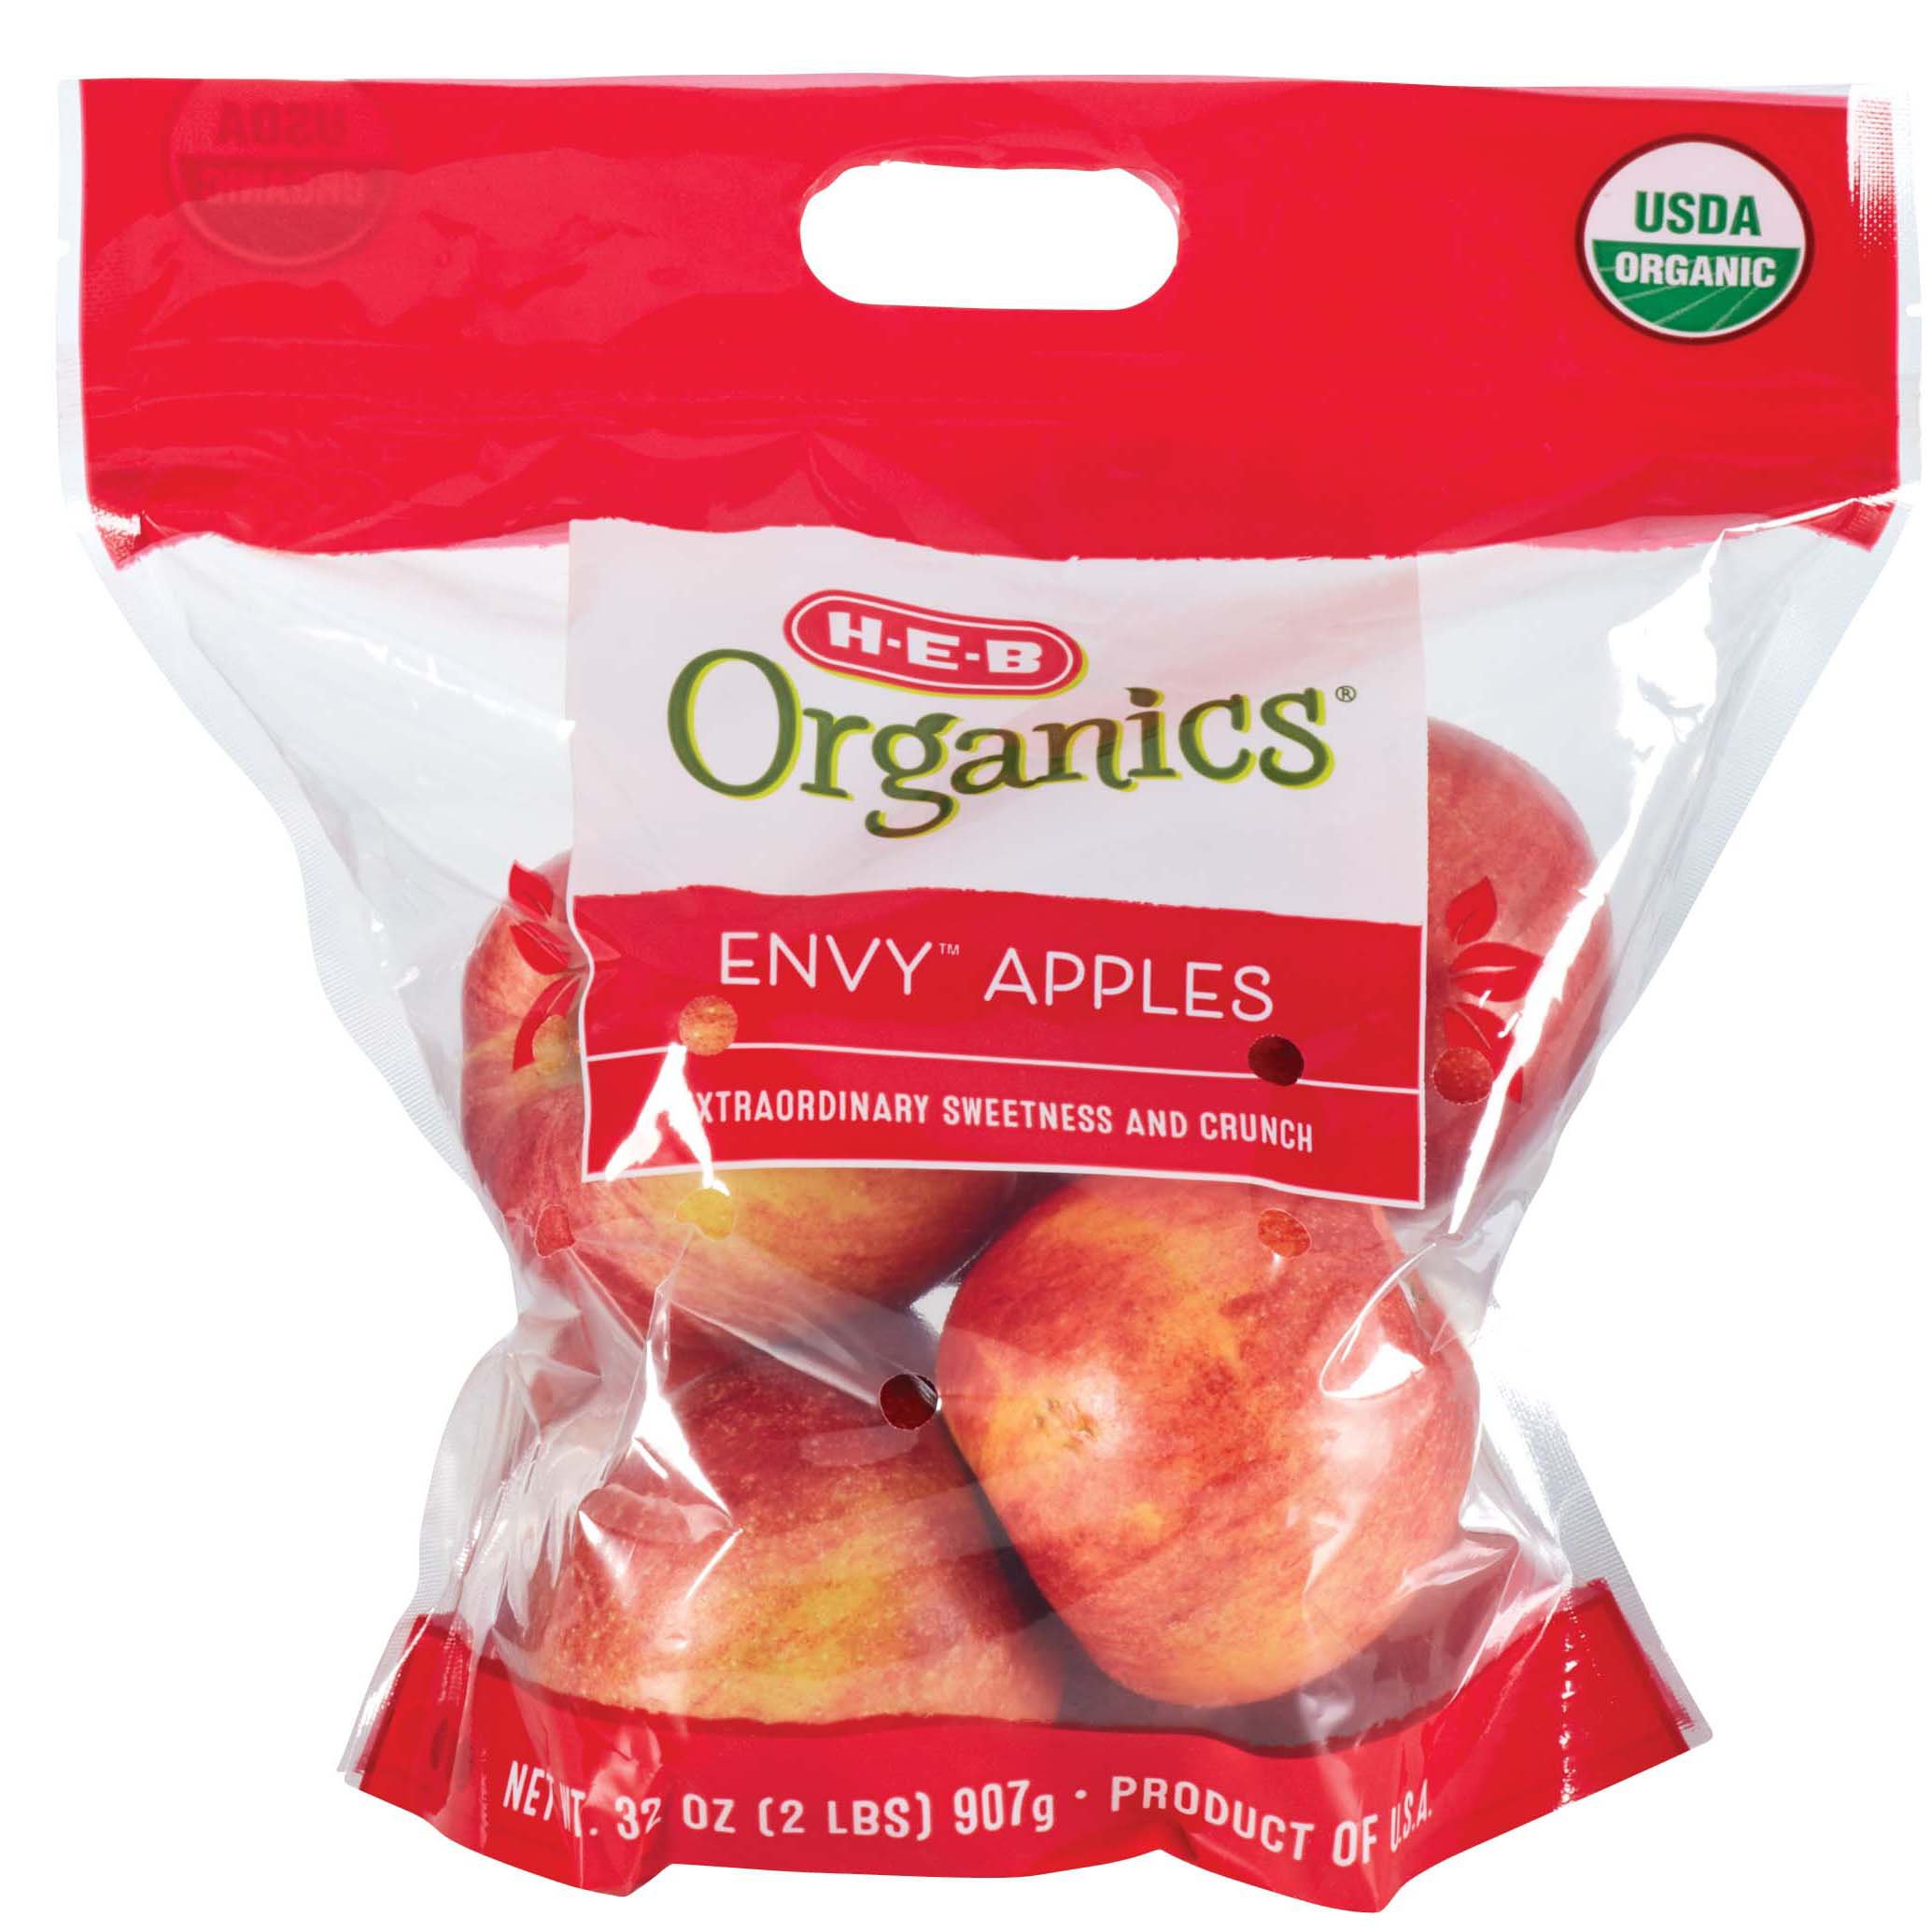 H-E-B Organics Fresh Envy Apples